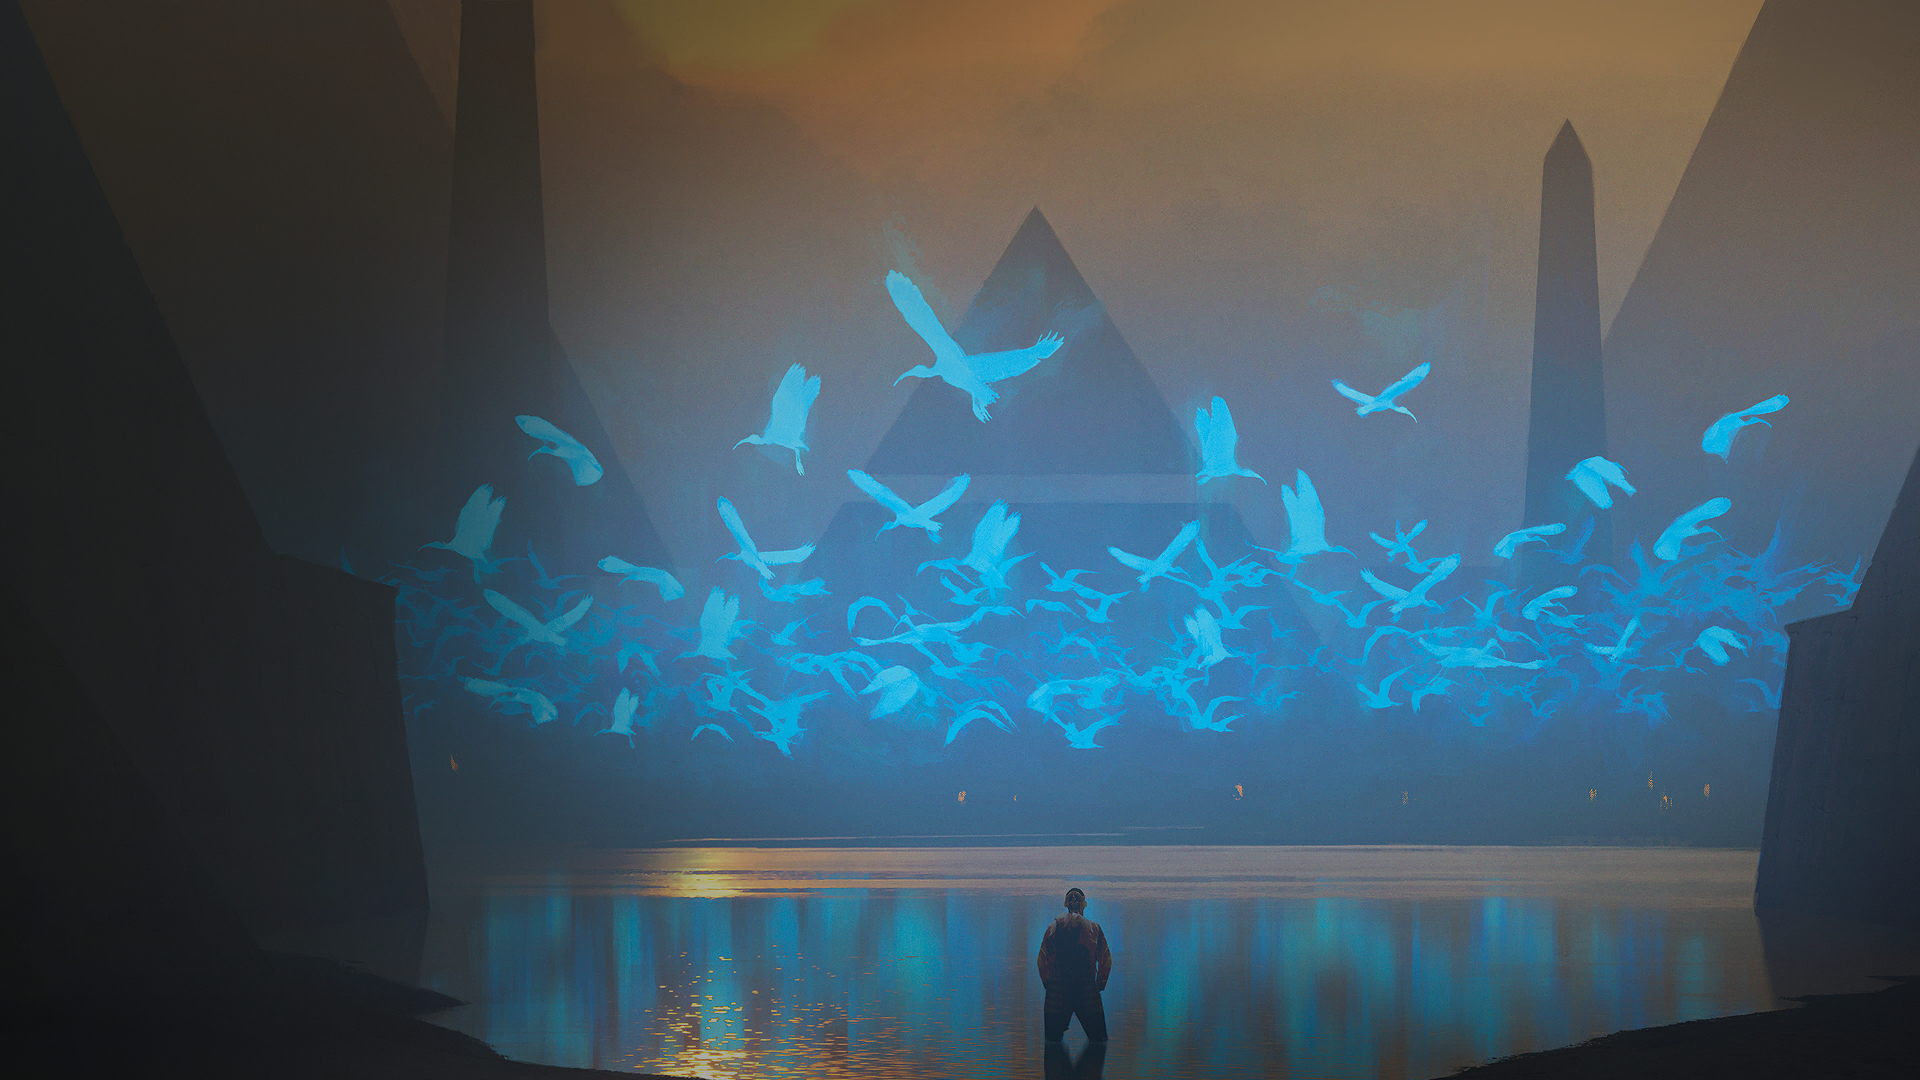 General 1920x1080 Magic: The Gathering artwork video game art Richard Wright cyan birds reflection pyramid